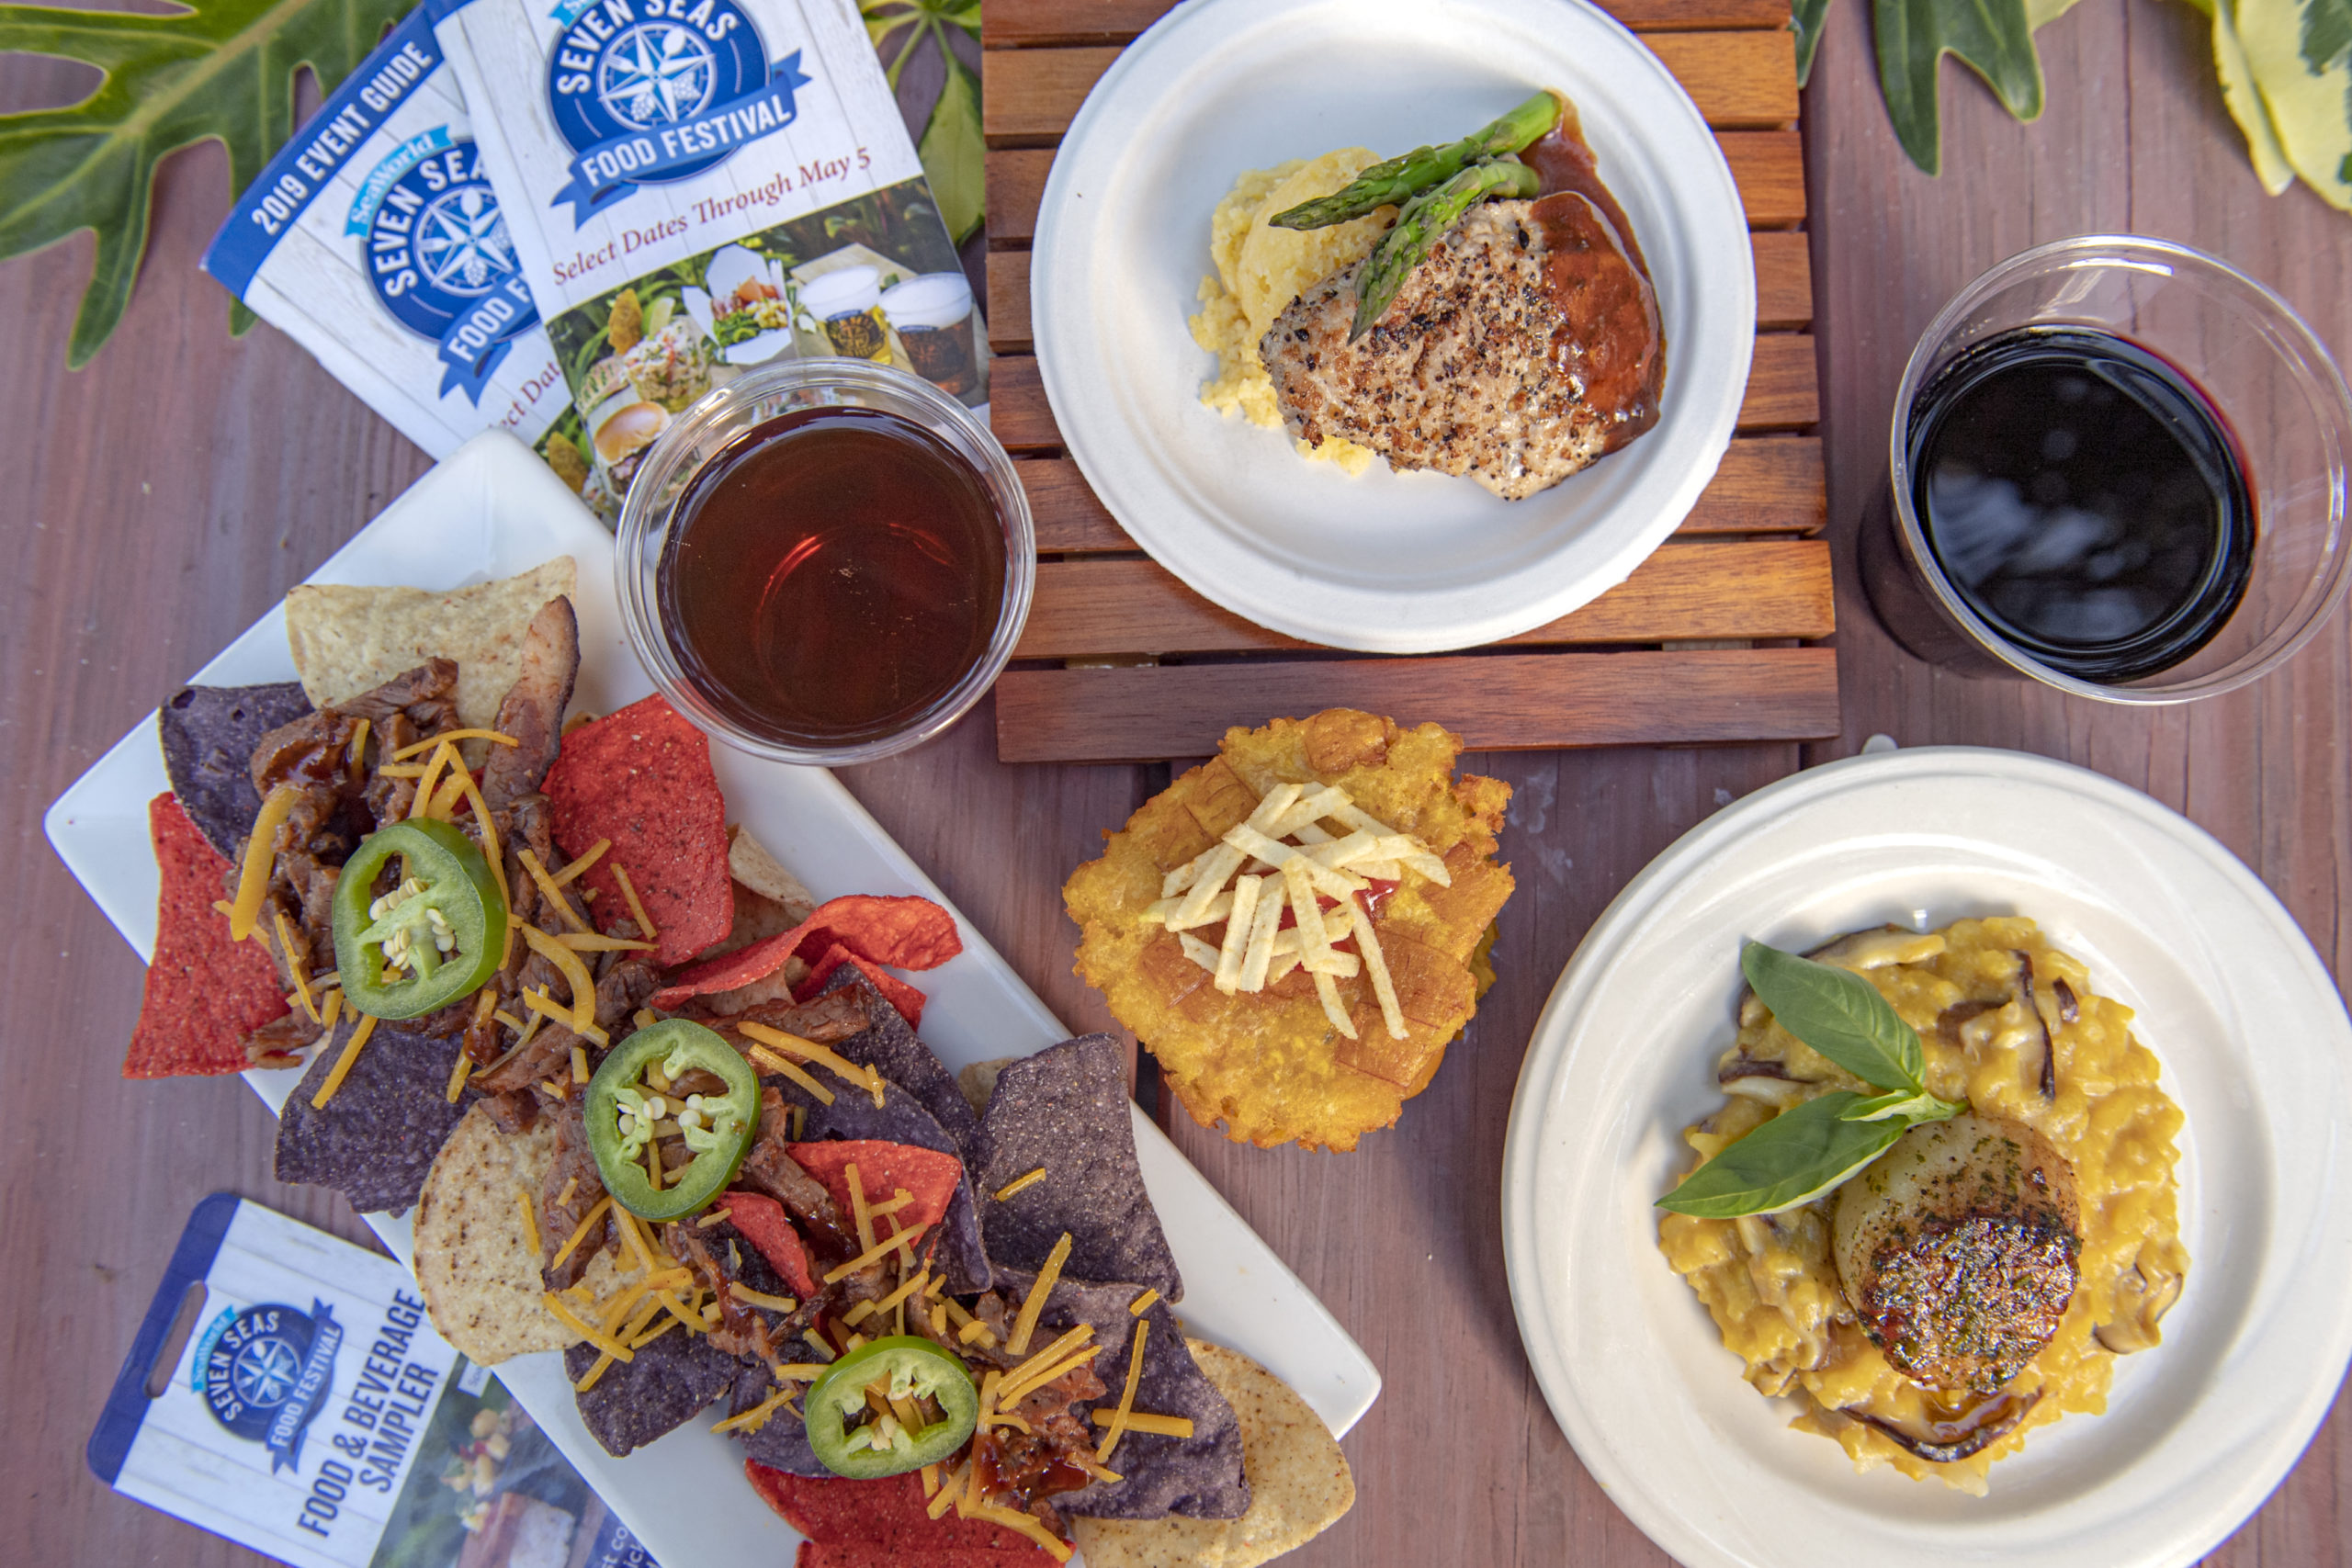 SeaWorld Orlando's Seven Seas Food Festival Serves Up Flavour